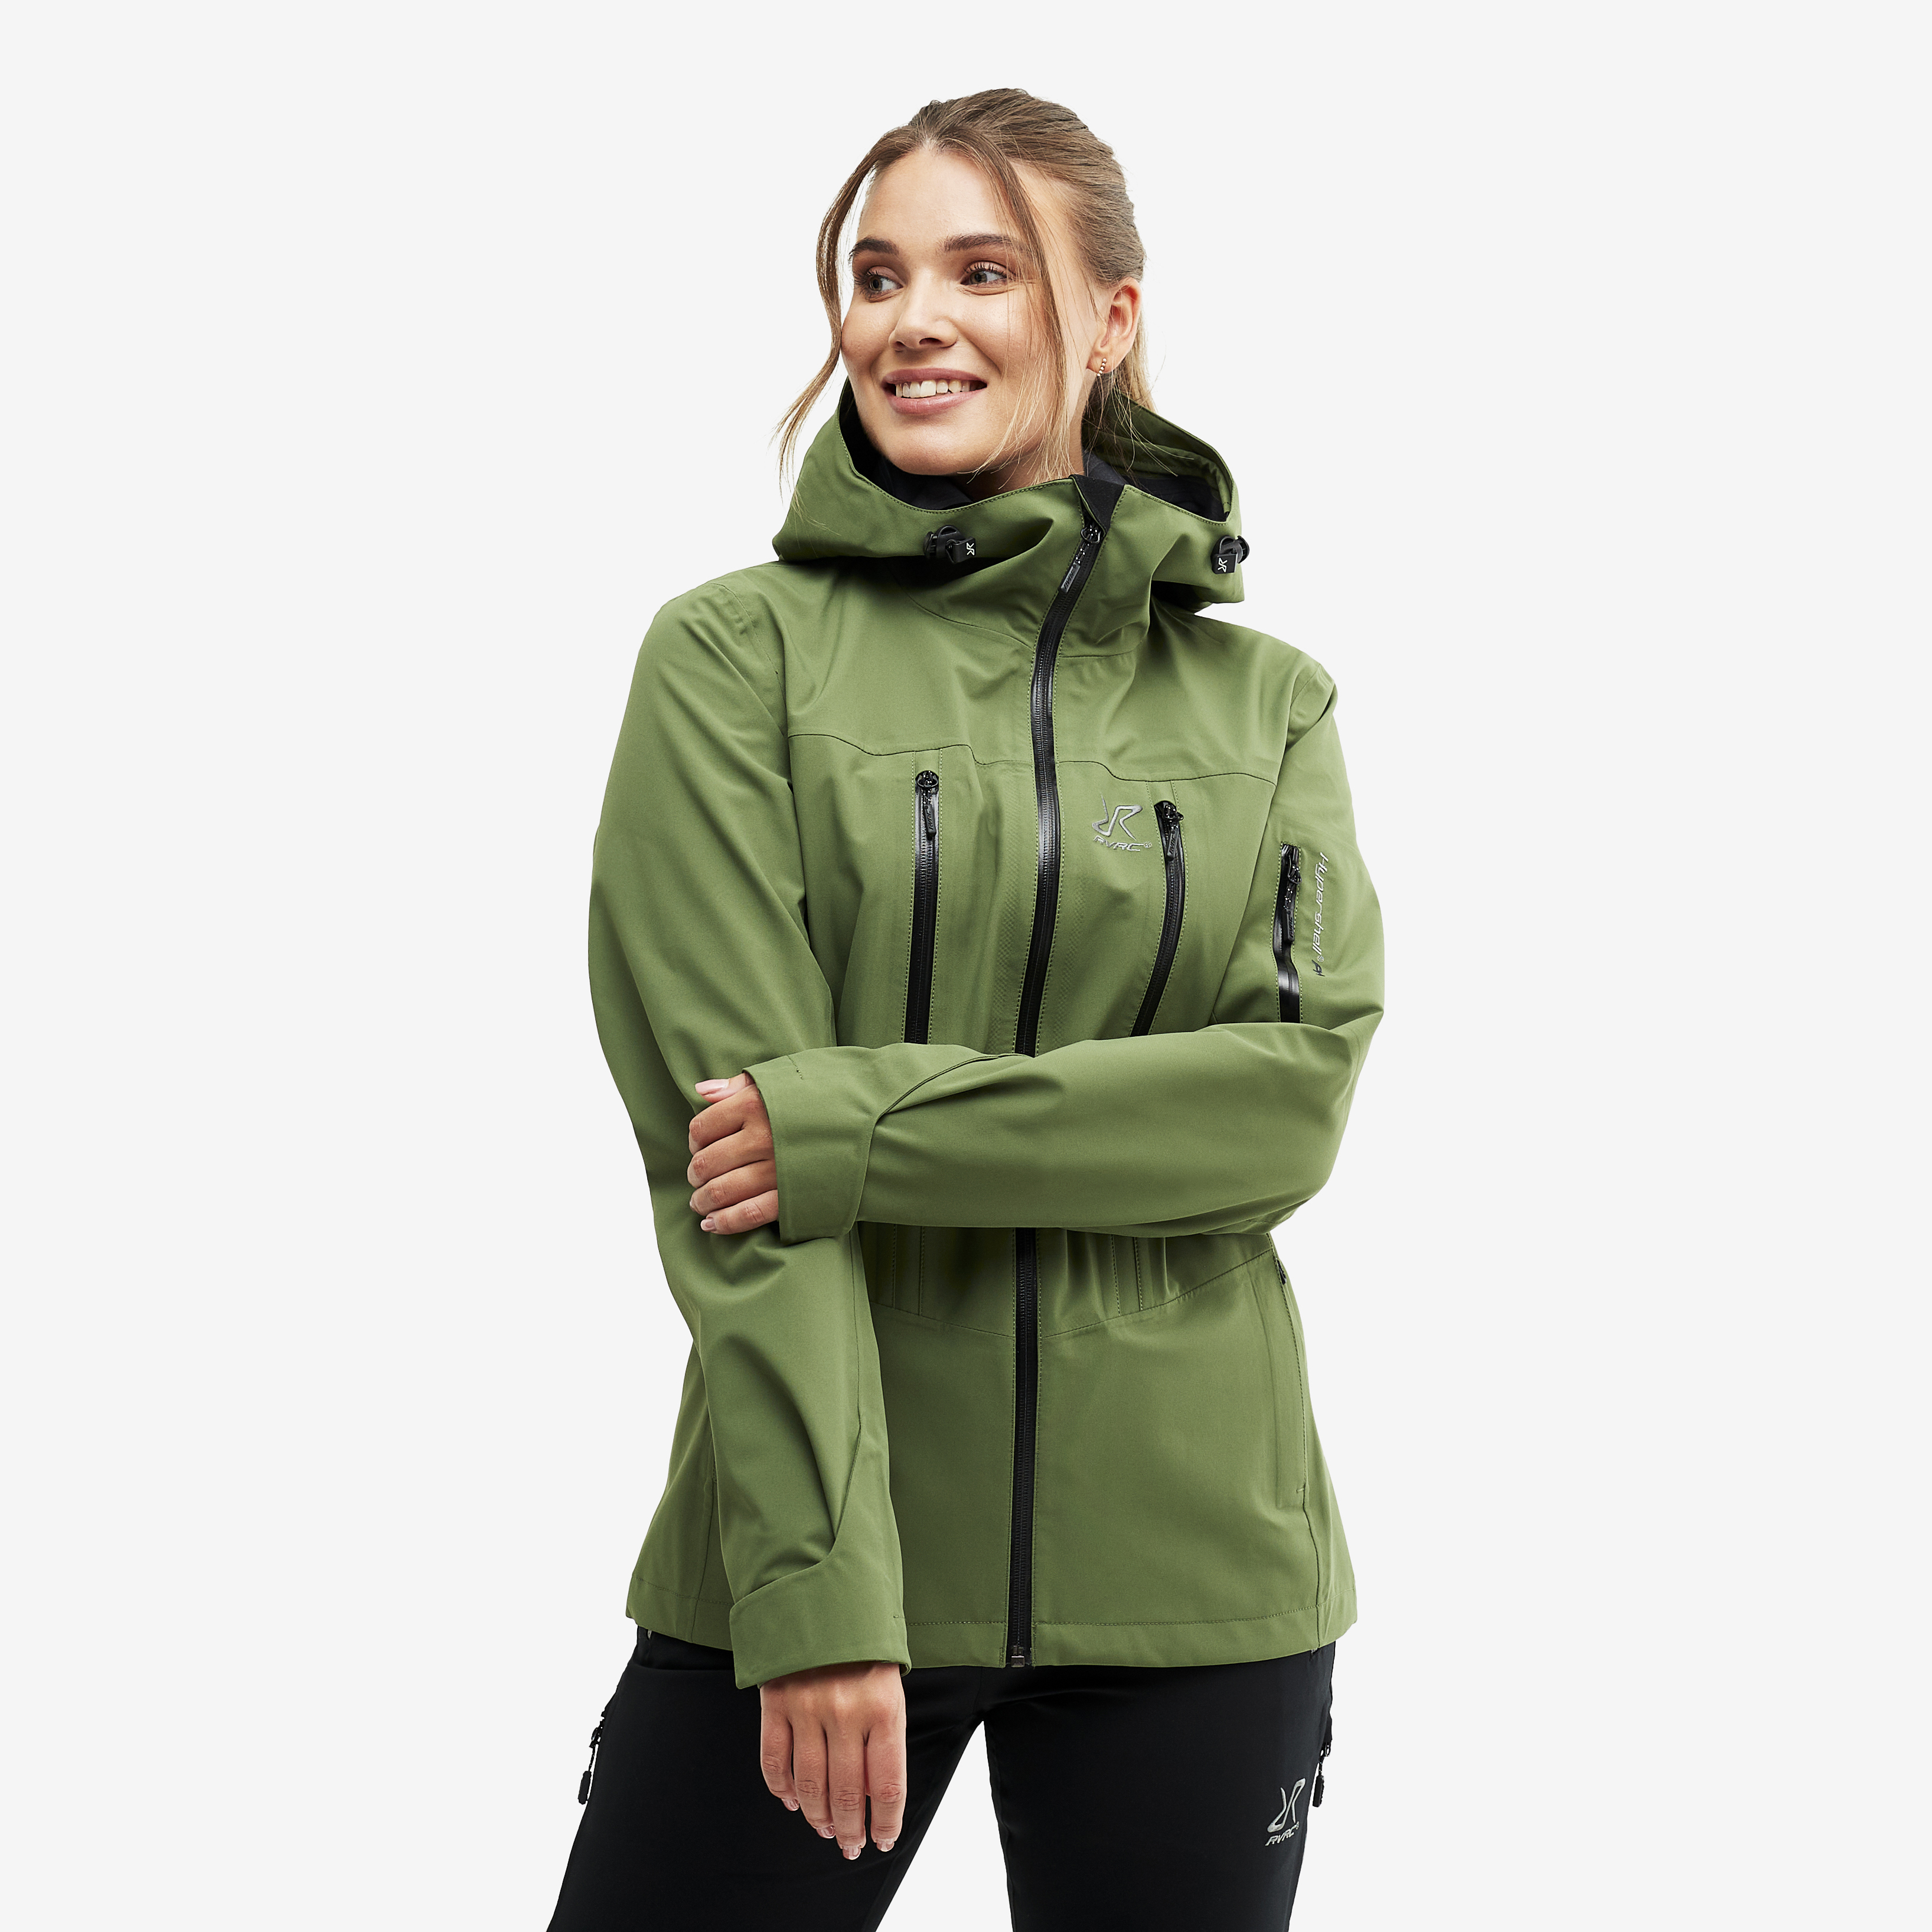 Whisper rain jacket for women in green